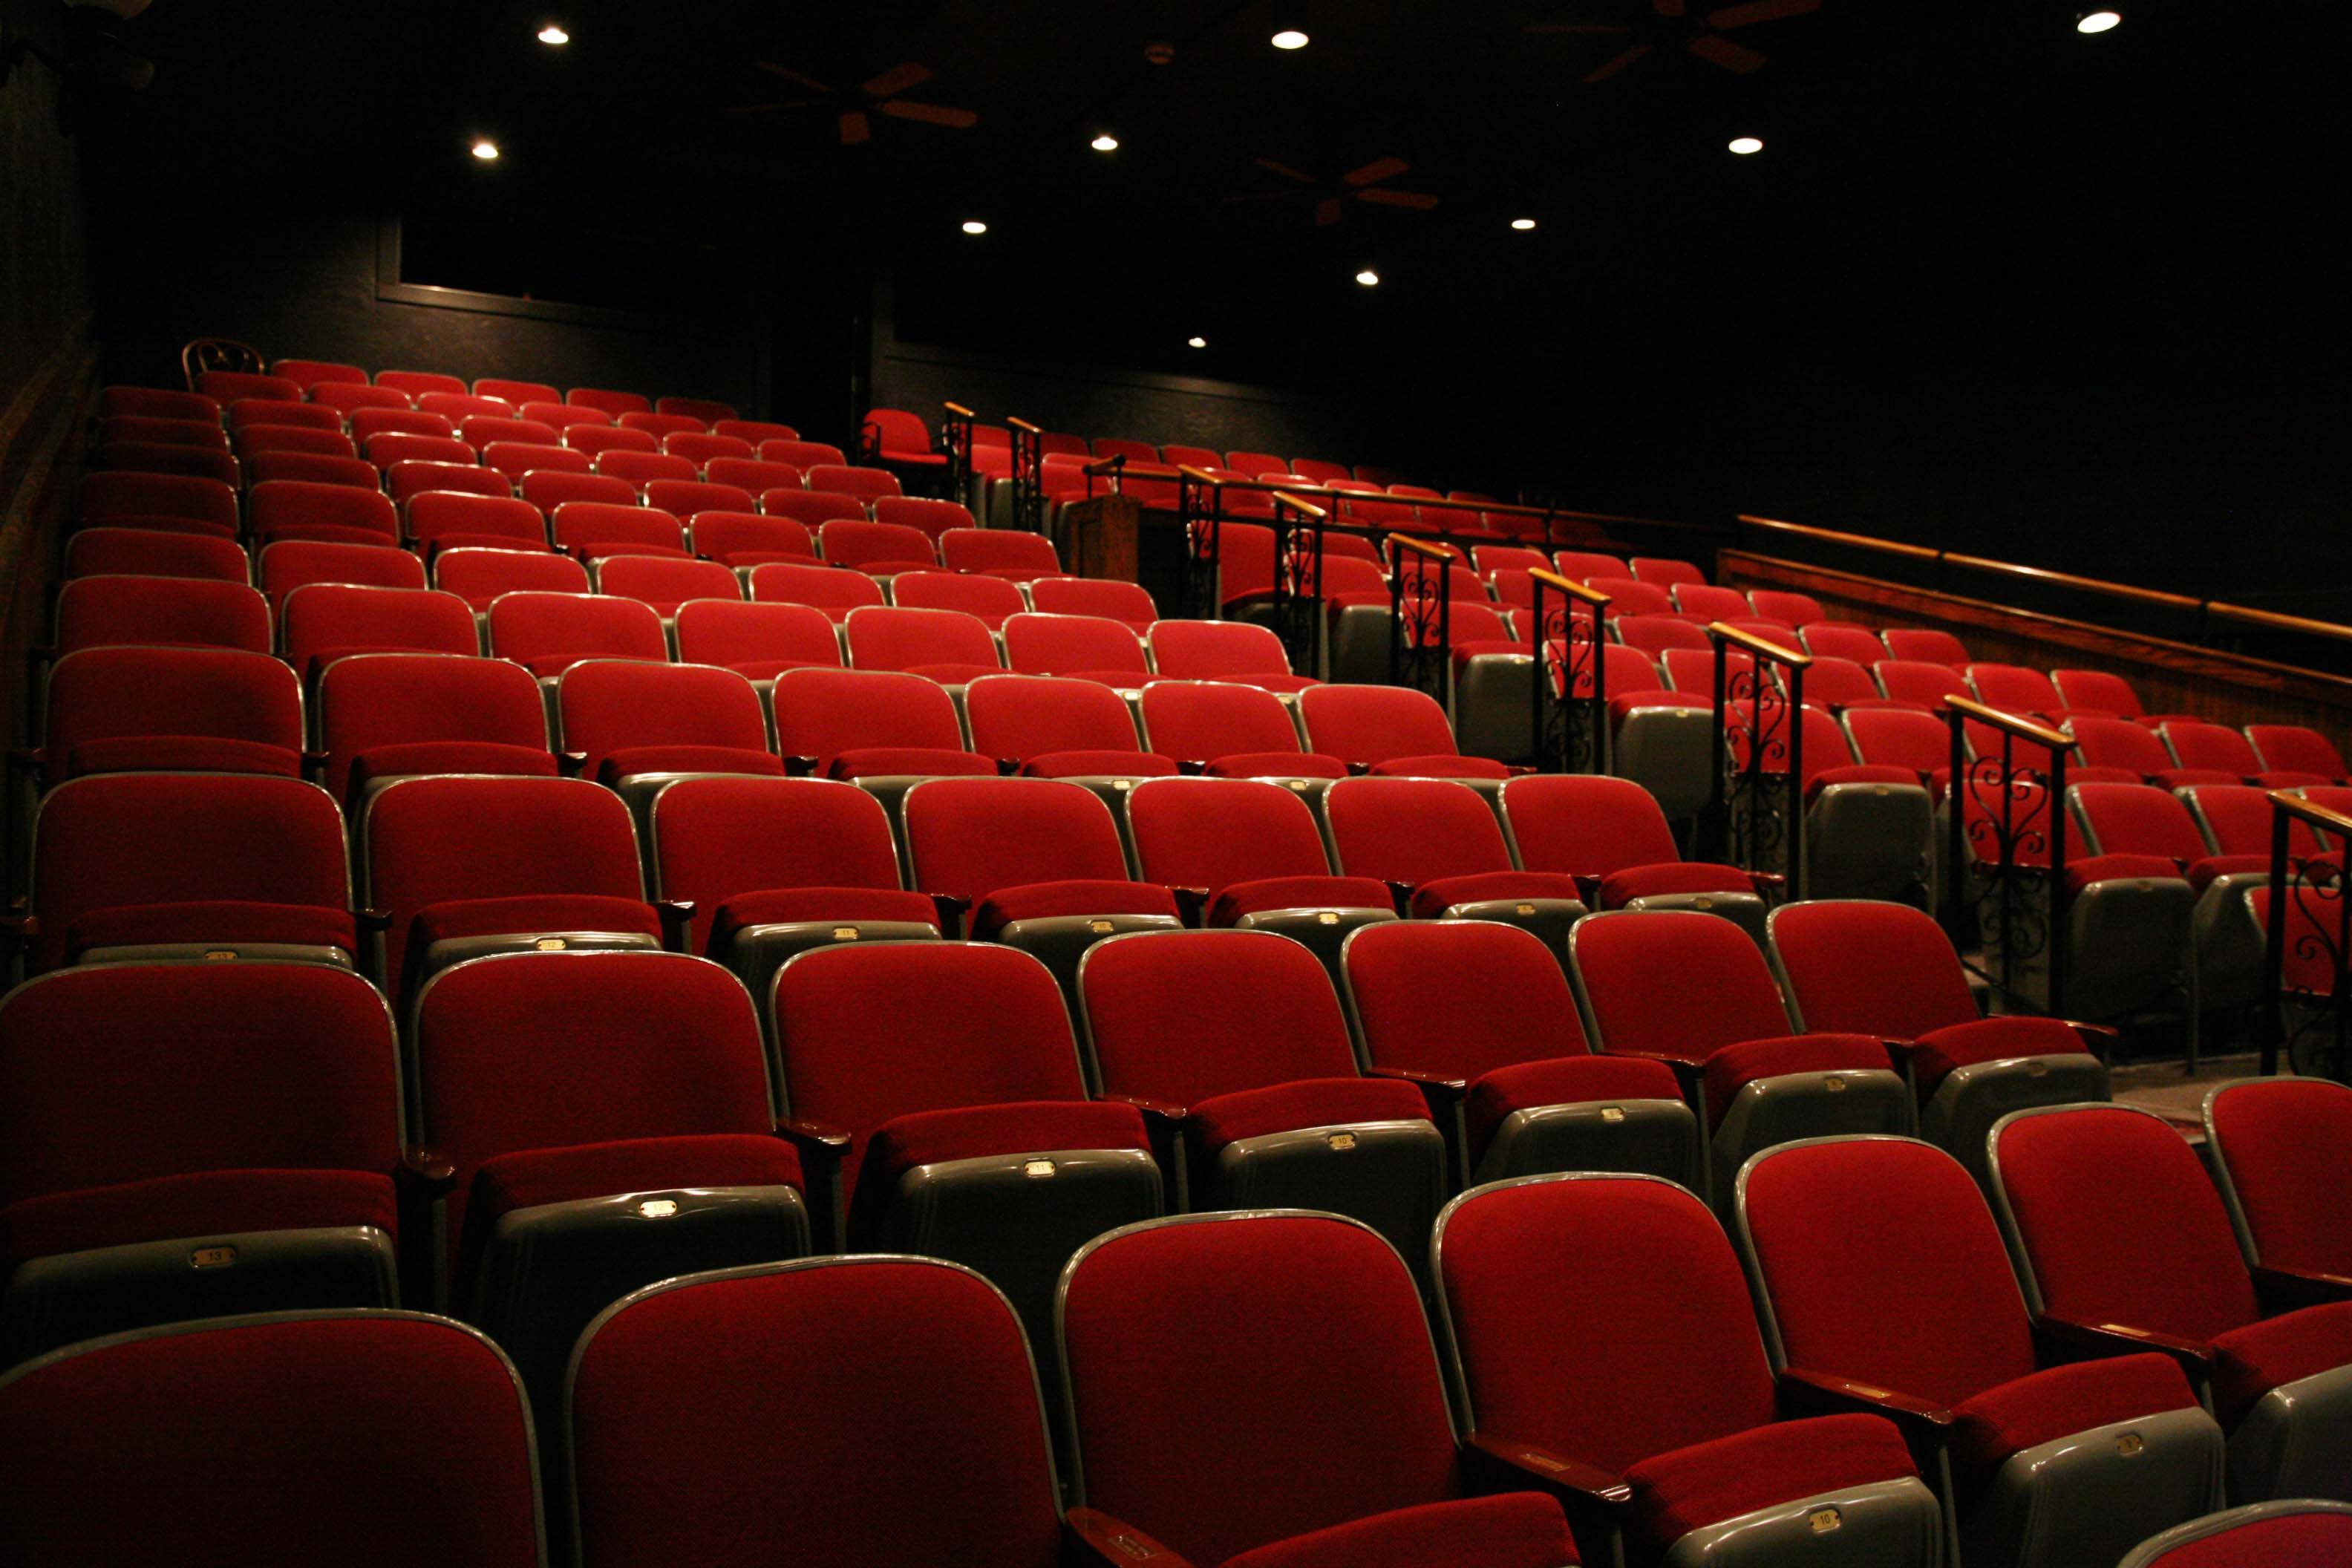 Theatre seats. Кинотеатр. Пустой кинотеатр. Зал кинотеатра. Театр кинотеатр.